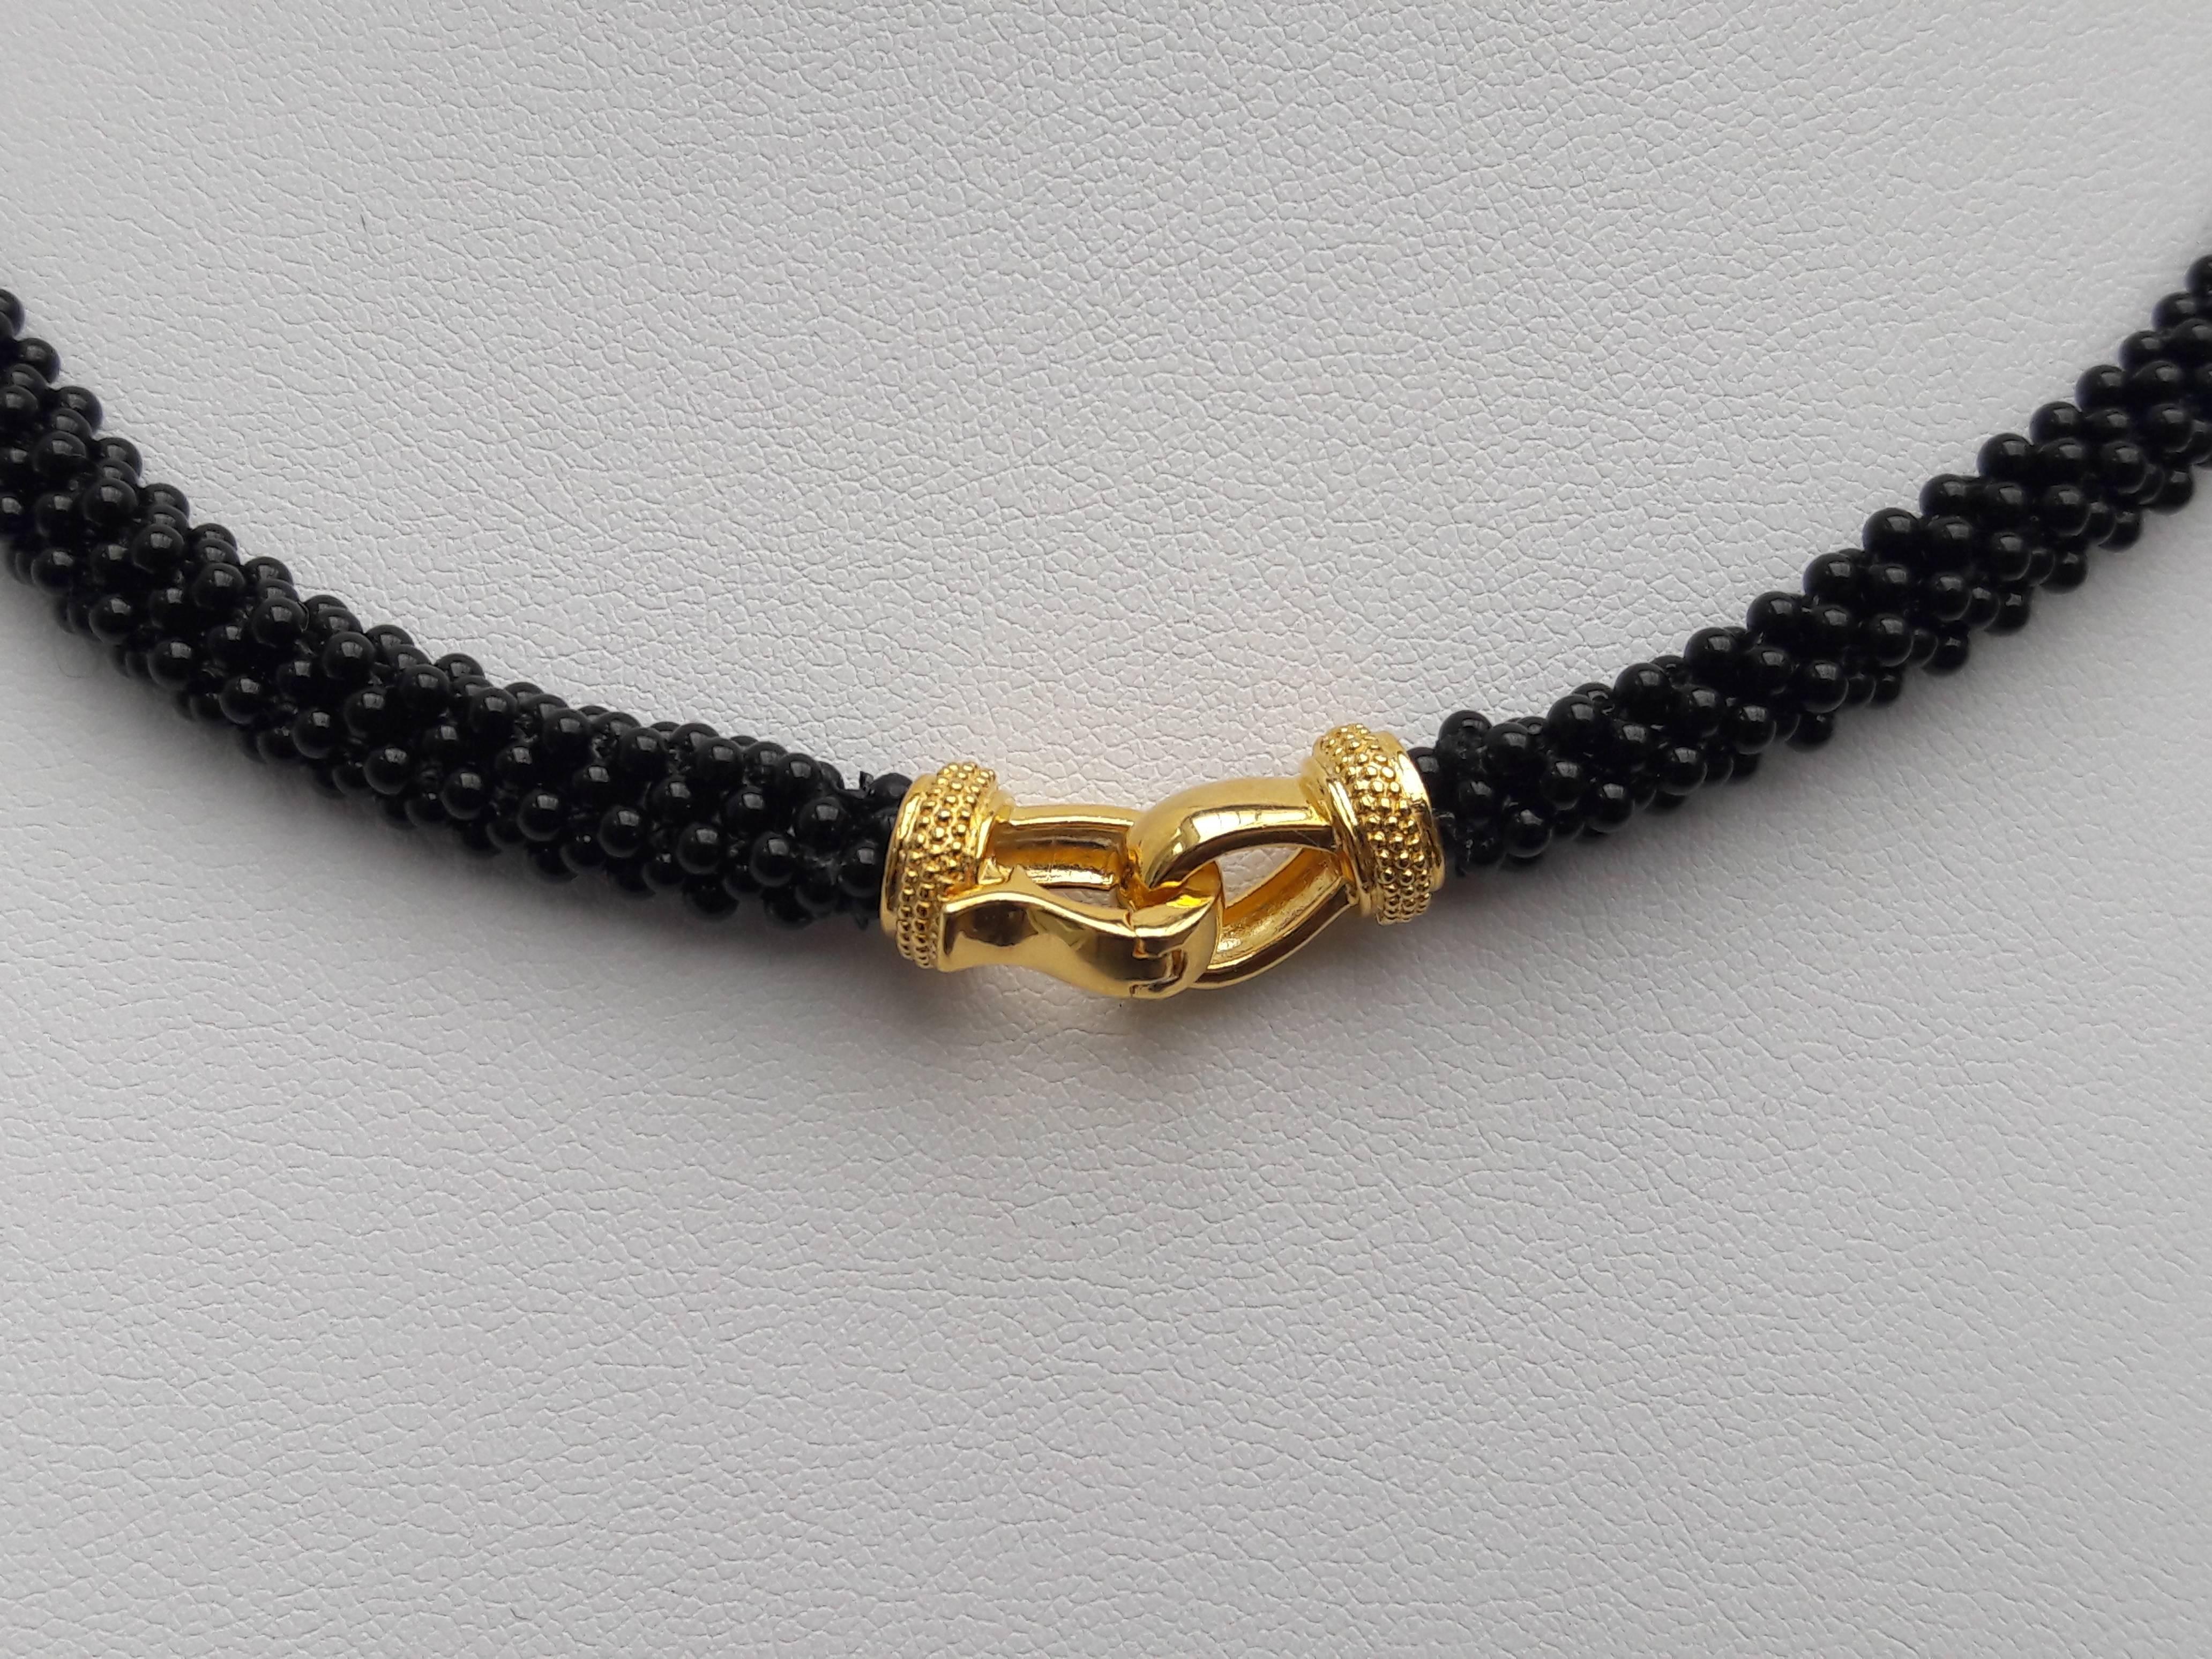 Bead Marina J. Unique Woven Black Onyx 3D Rope Necklace with Vintage Centerpiece